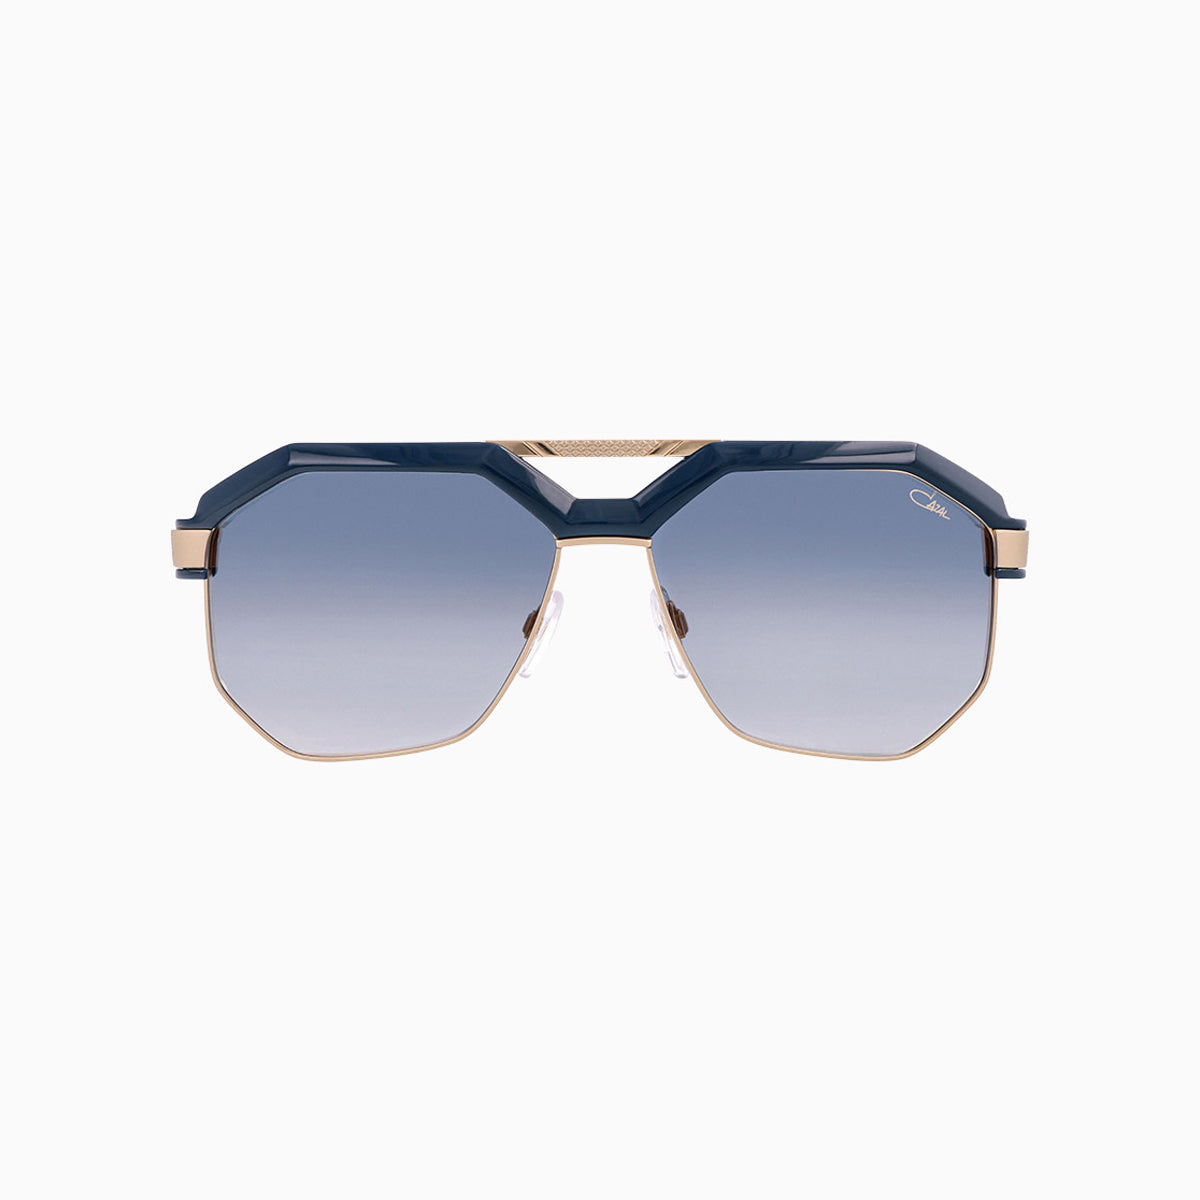 cazal-eyewear-mens-cazal-9092-003-night-blue-sunglasses-cz0909262003